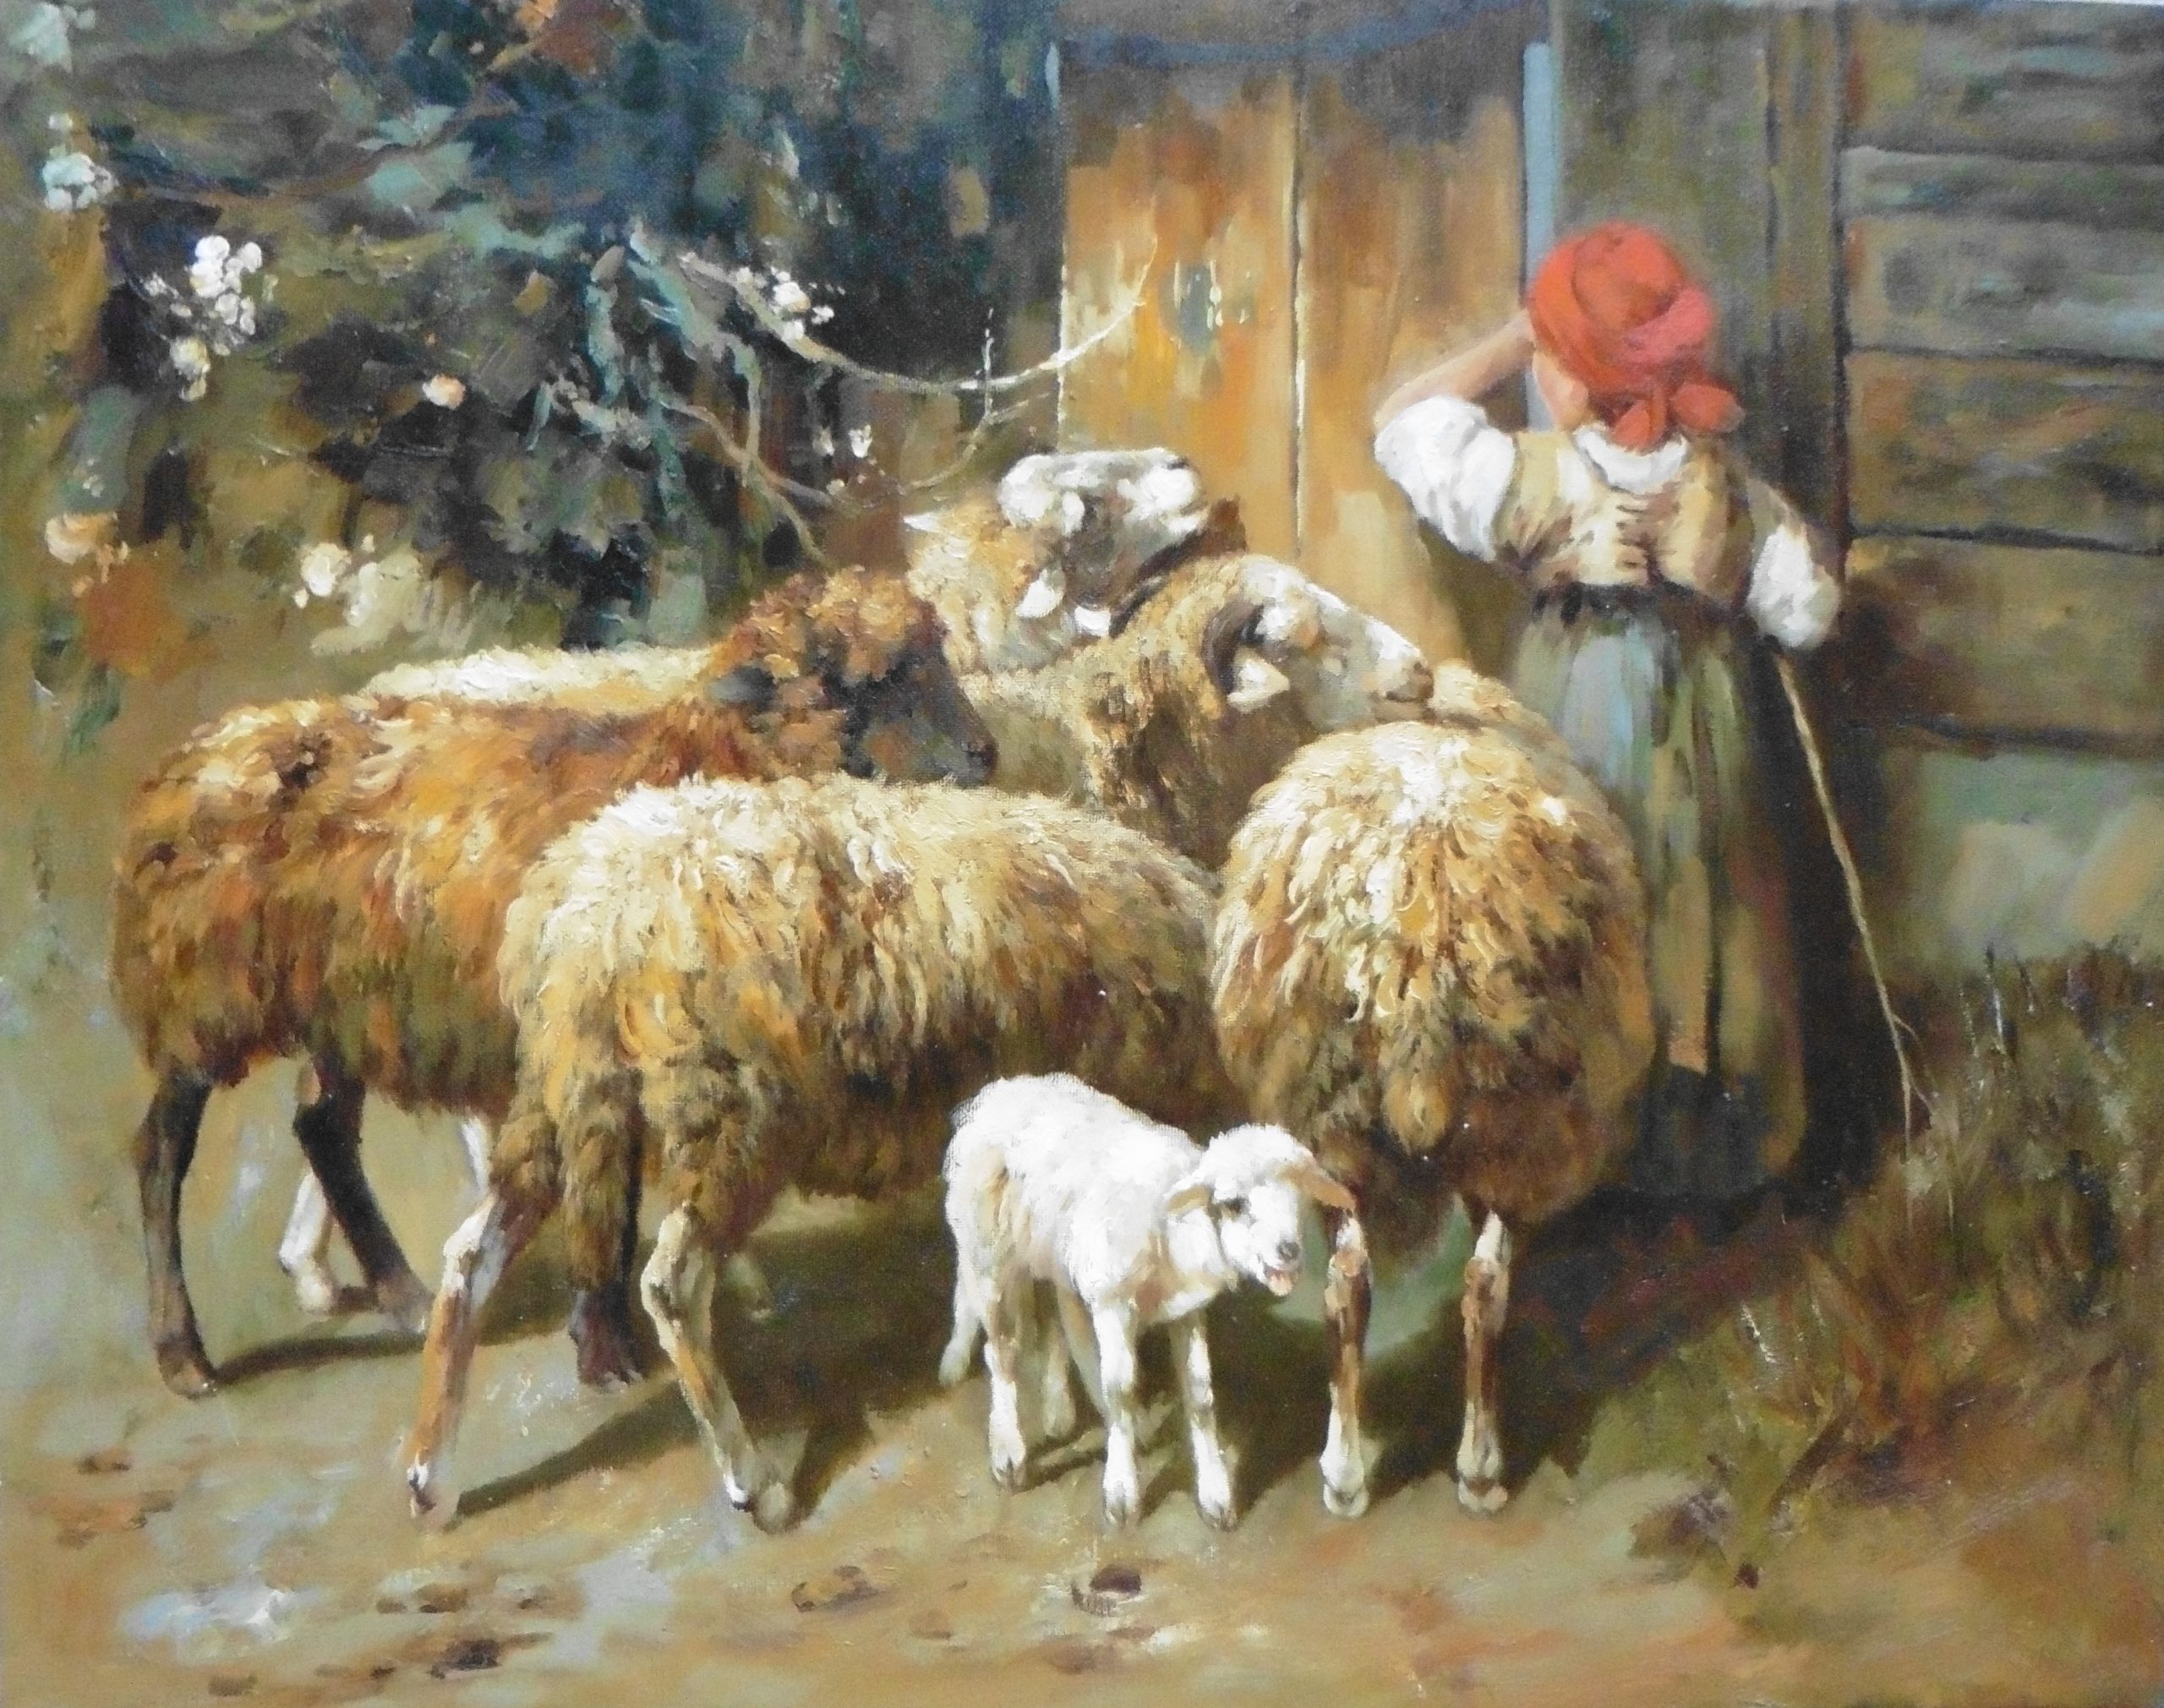 The shepherdess